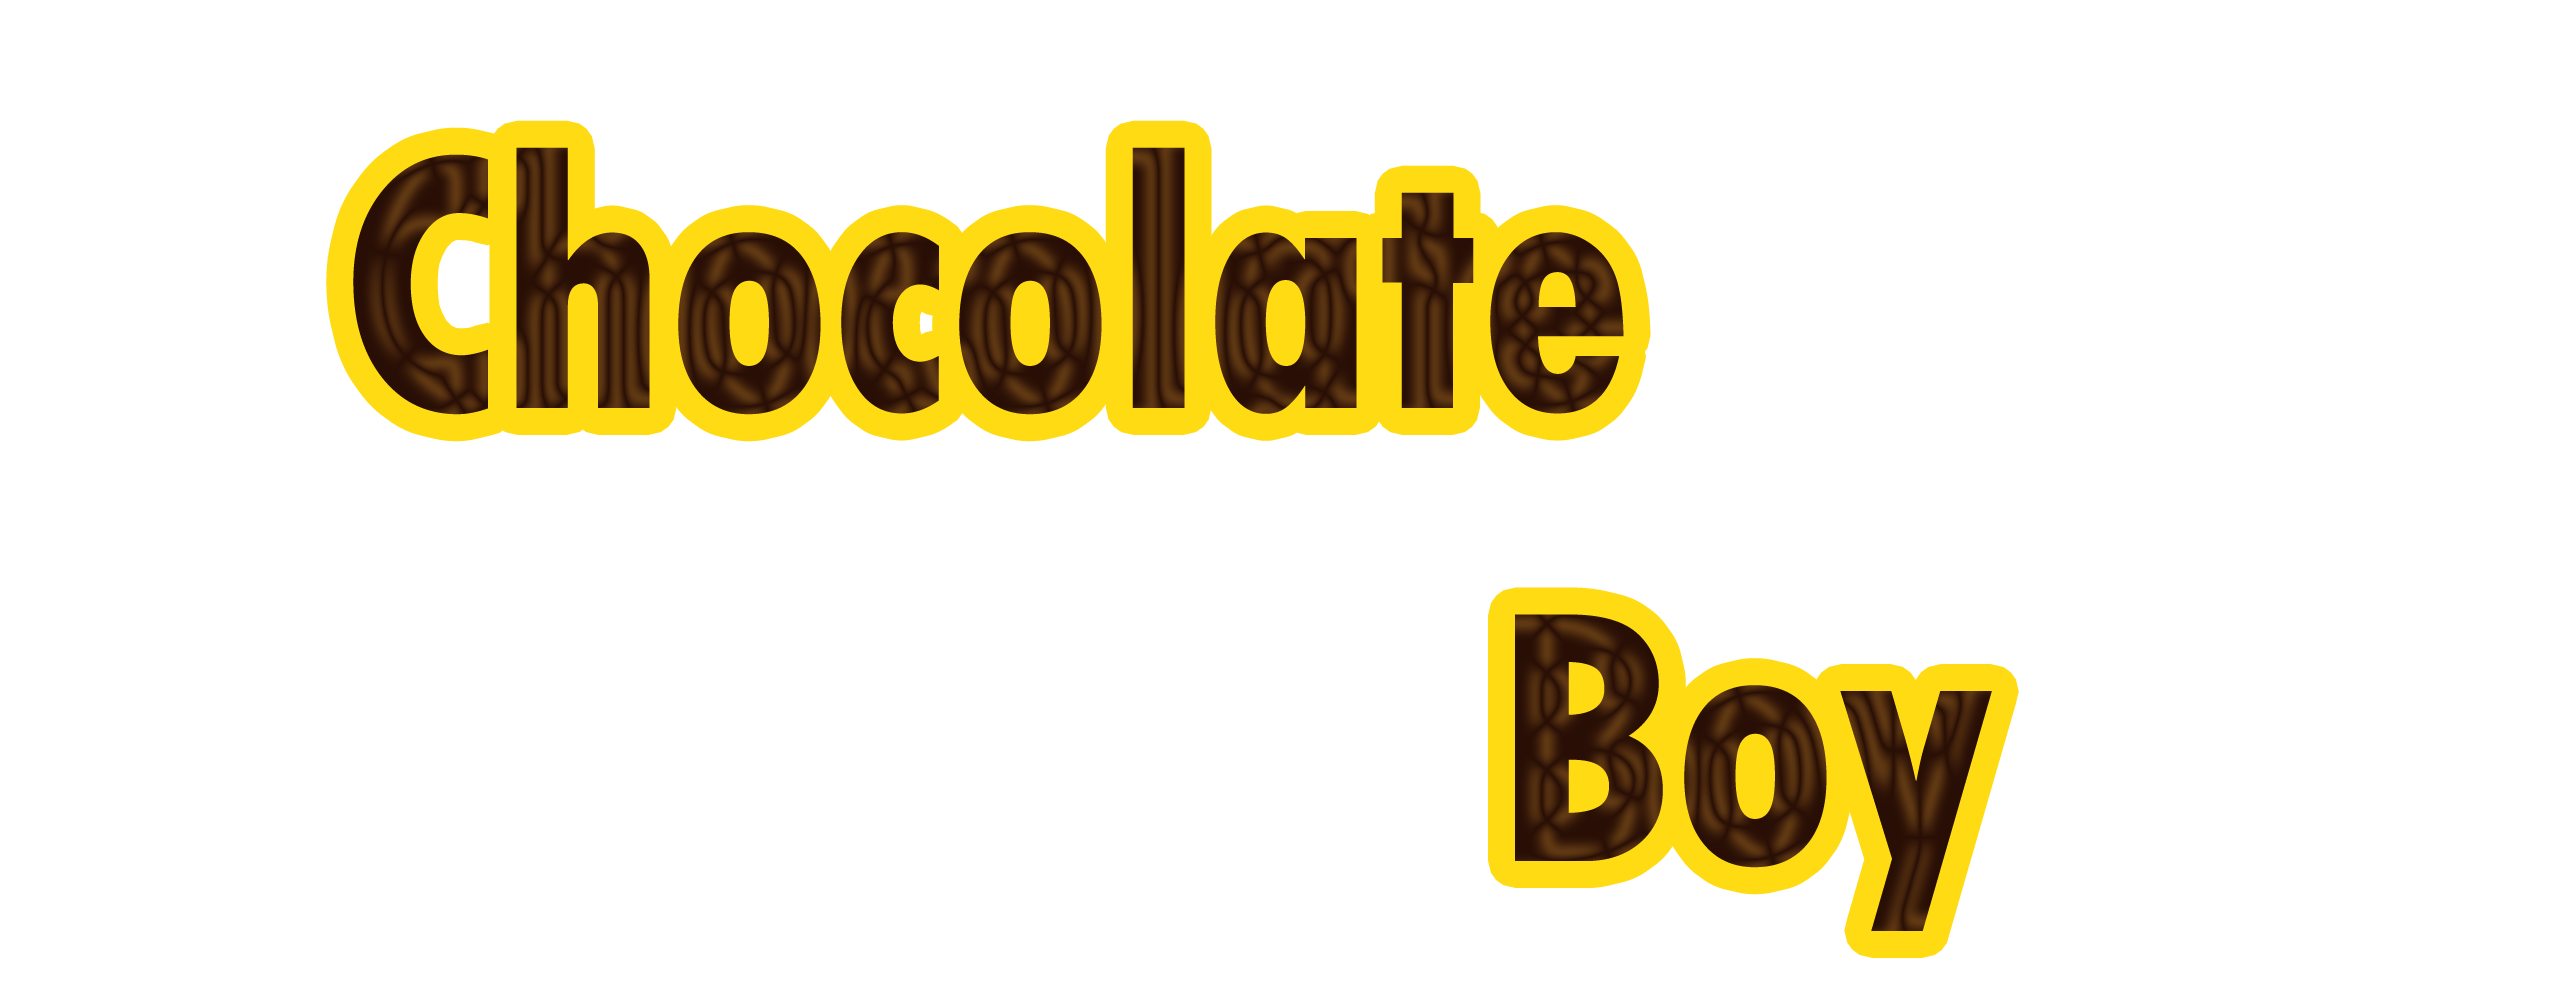 Chocolate Boy #3